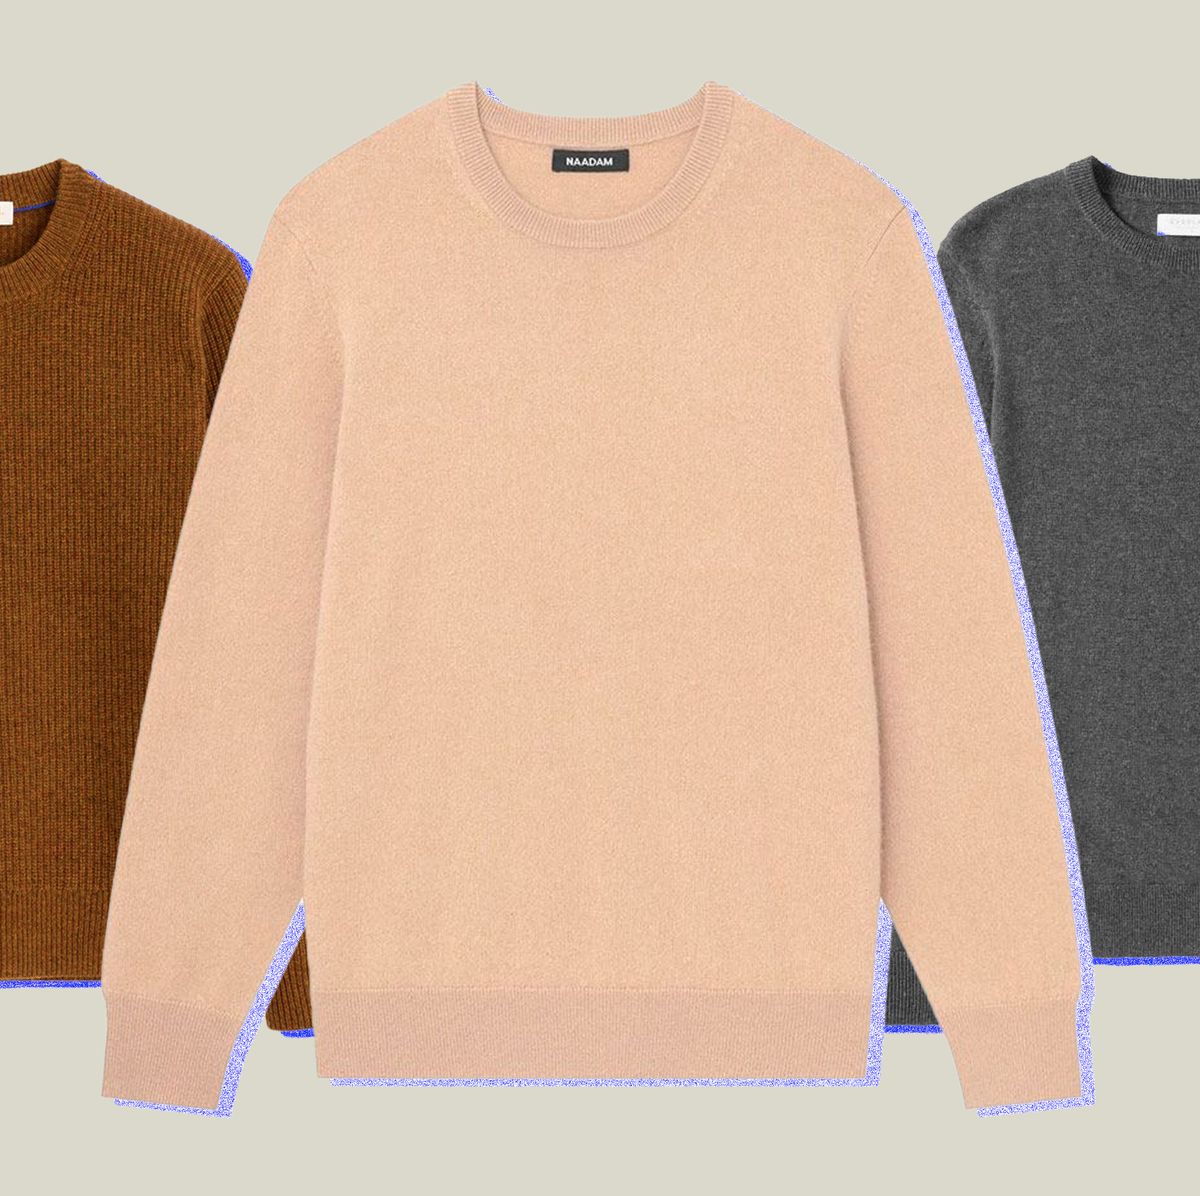 Idol hvad som helst Ordsprog The Best Cashmere Sweaters for Men at Every Budget